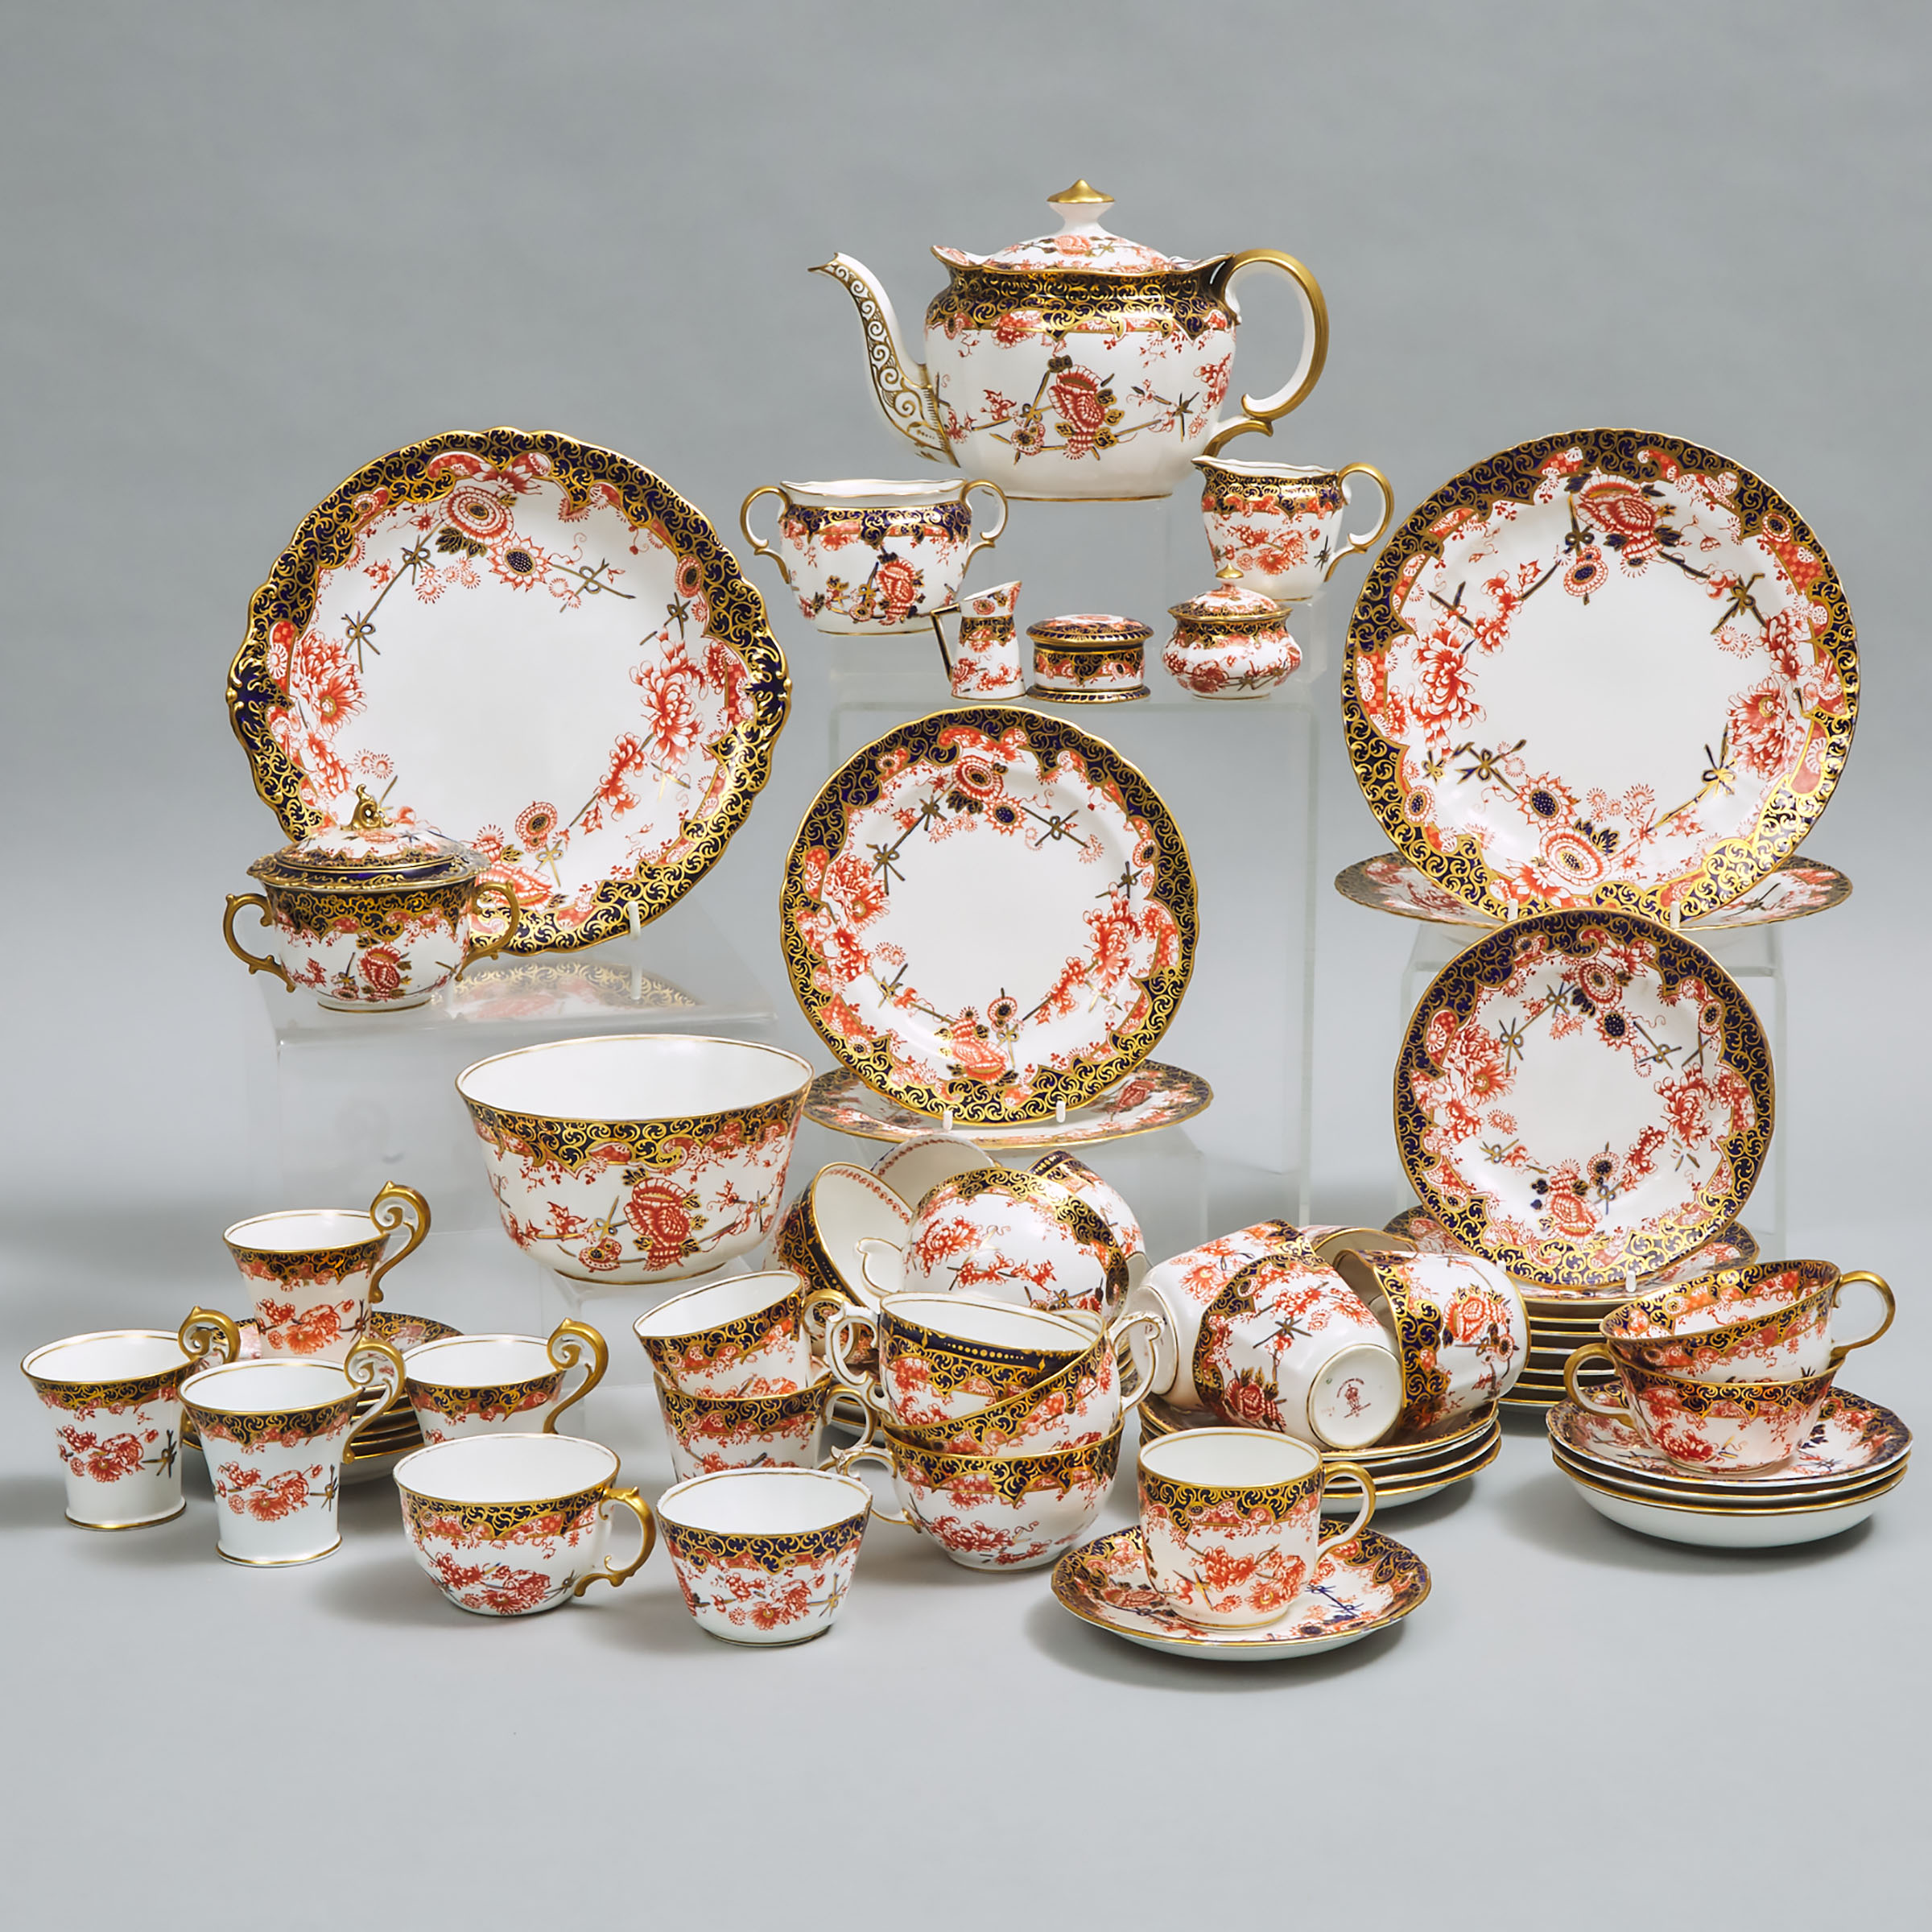 Royal Crown Derby 'Scissor' (2649) Pattern Tea Service, 20th century